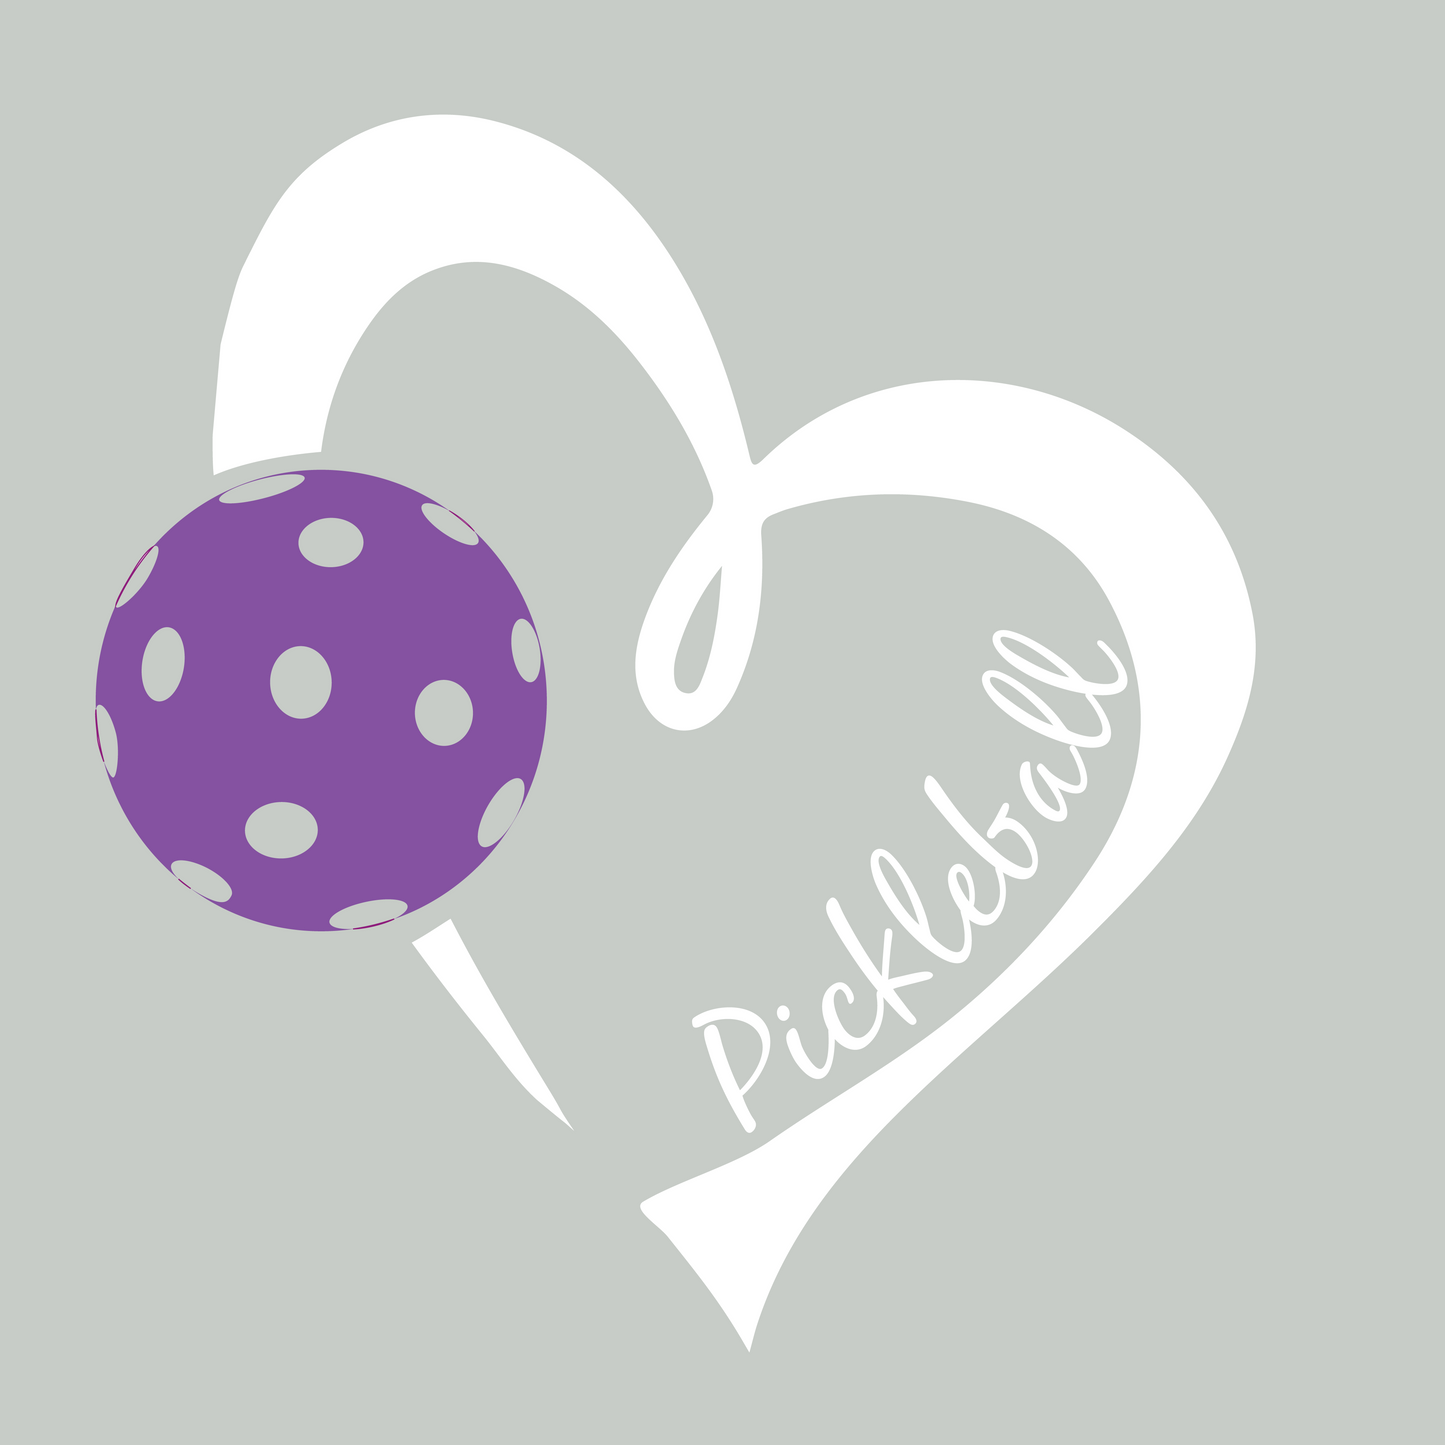 Pickleball Love (Purple) | Youth Short Sleeve Athletic Pickleball Shirt | 100% Polyester